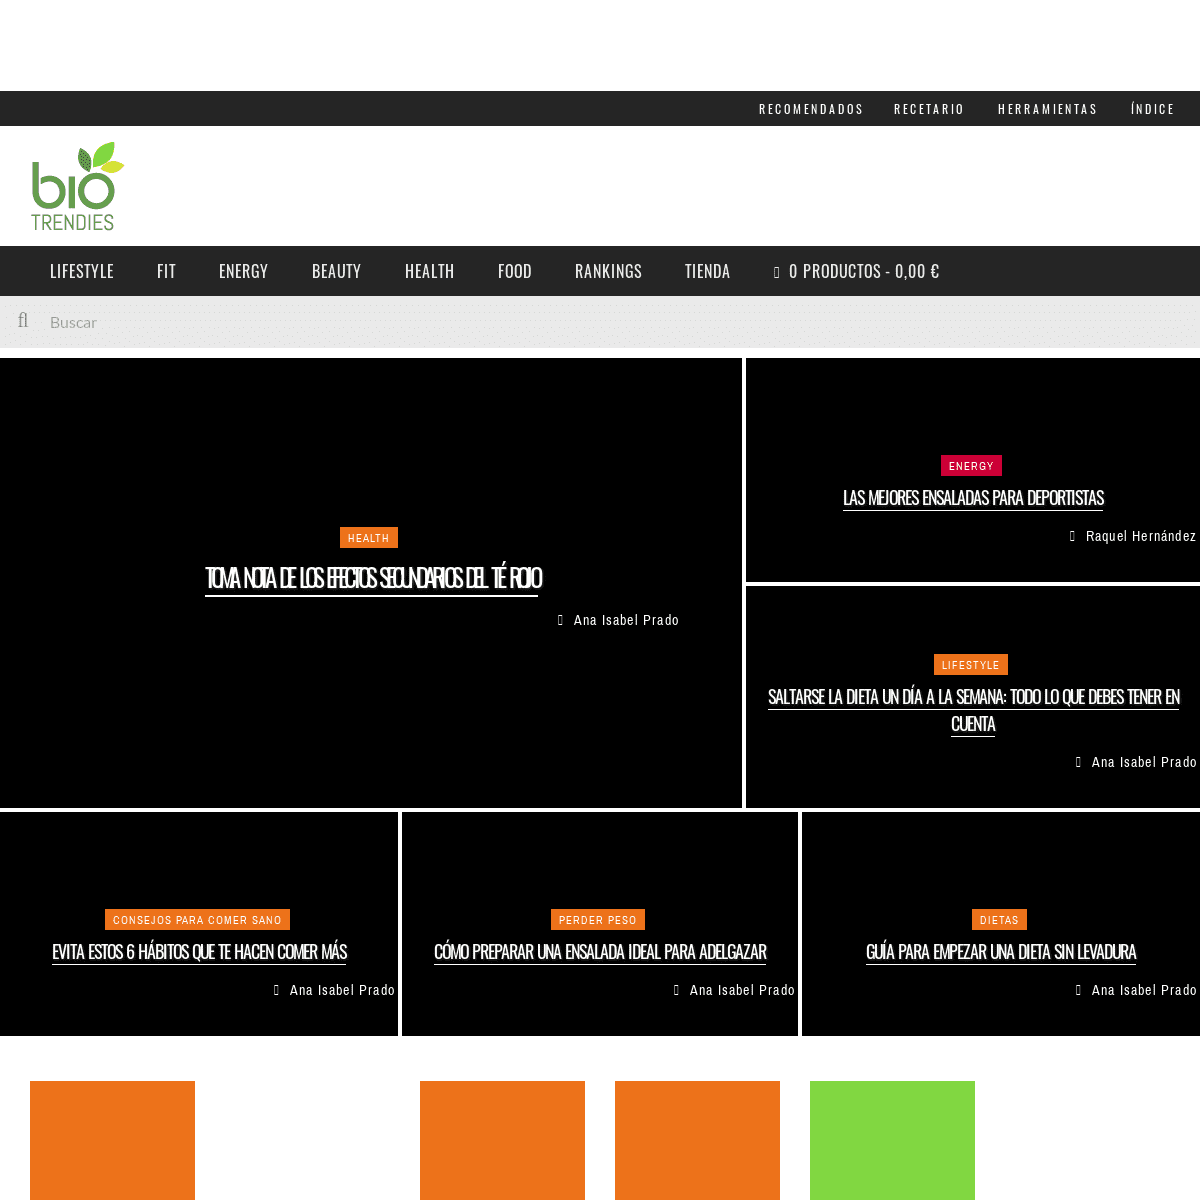 A complete backup of biotrendies.com